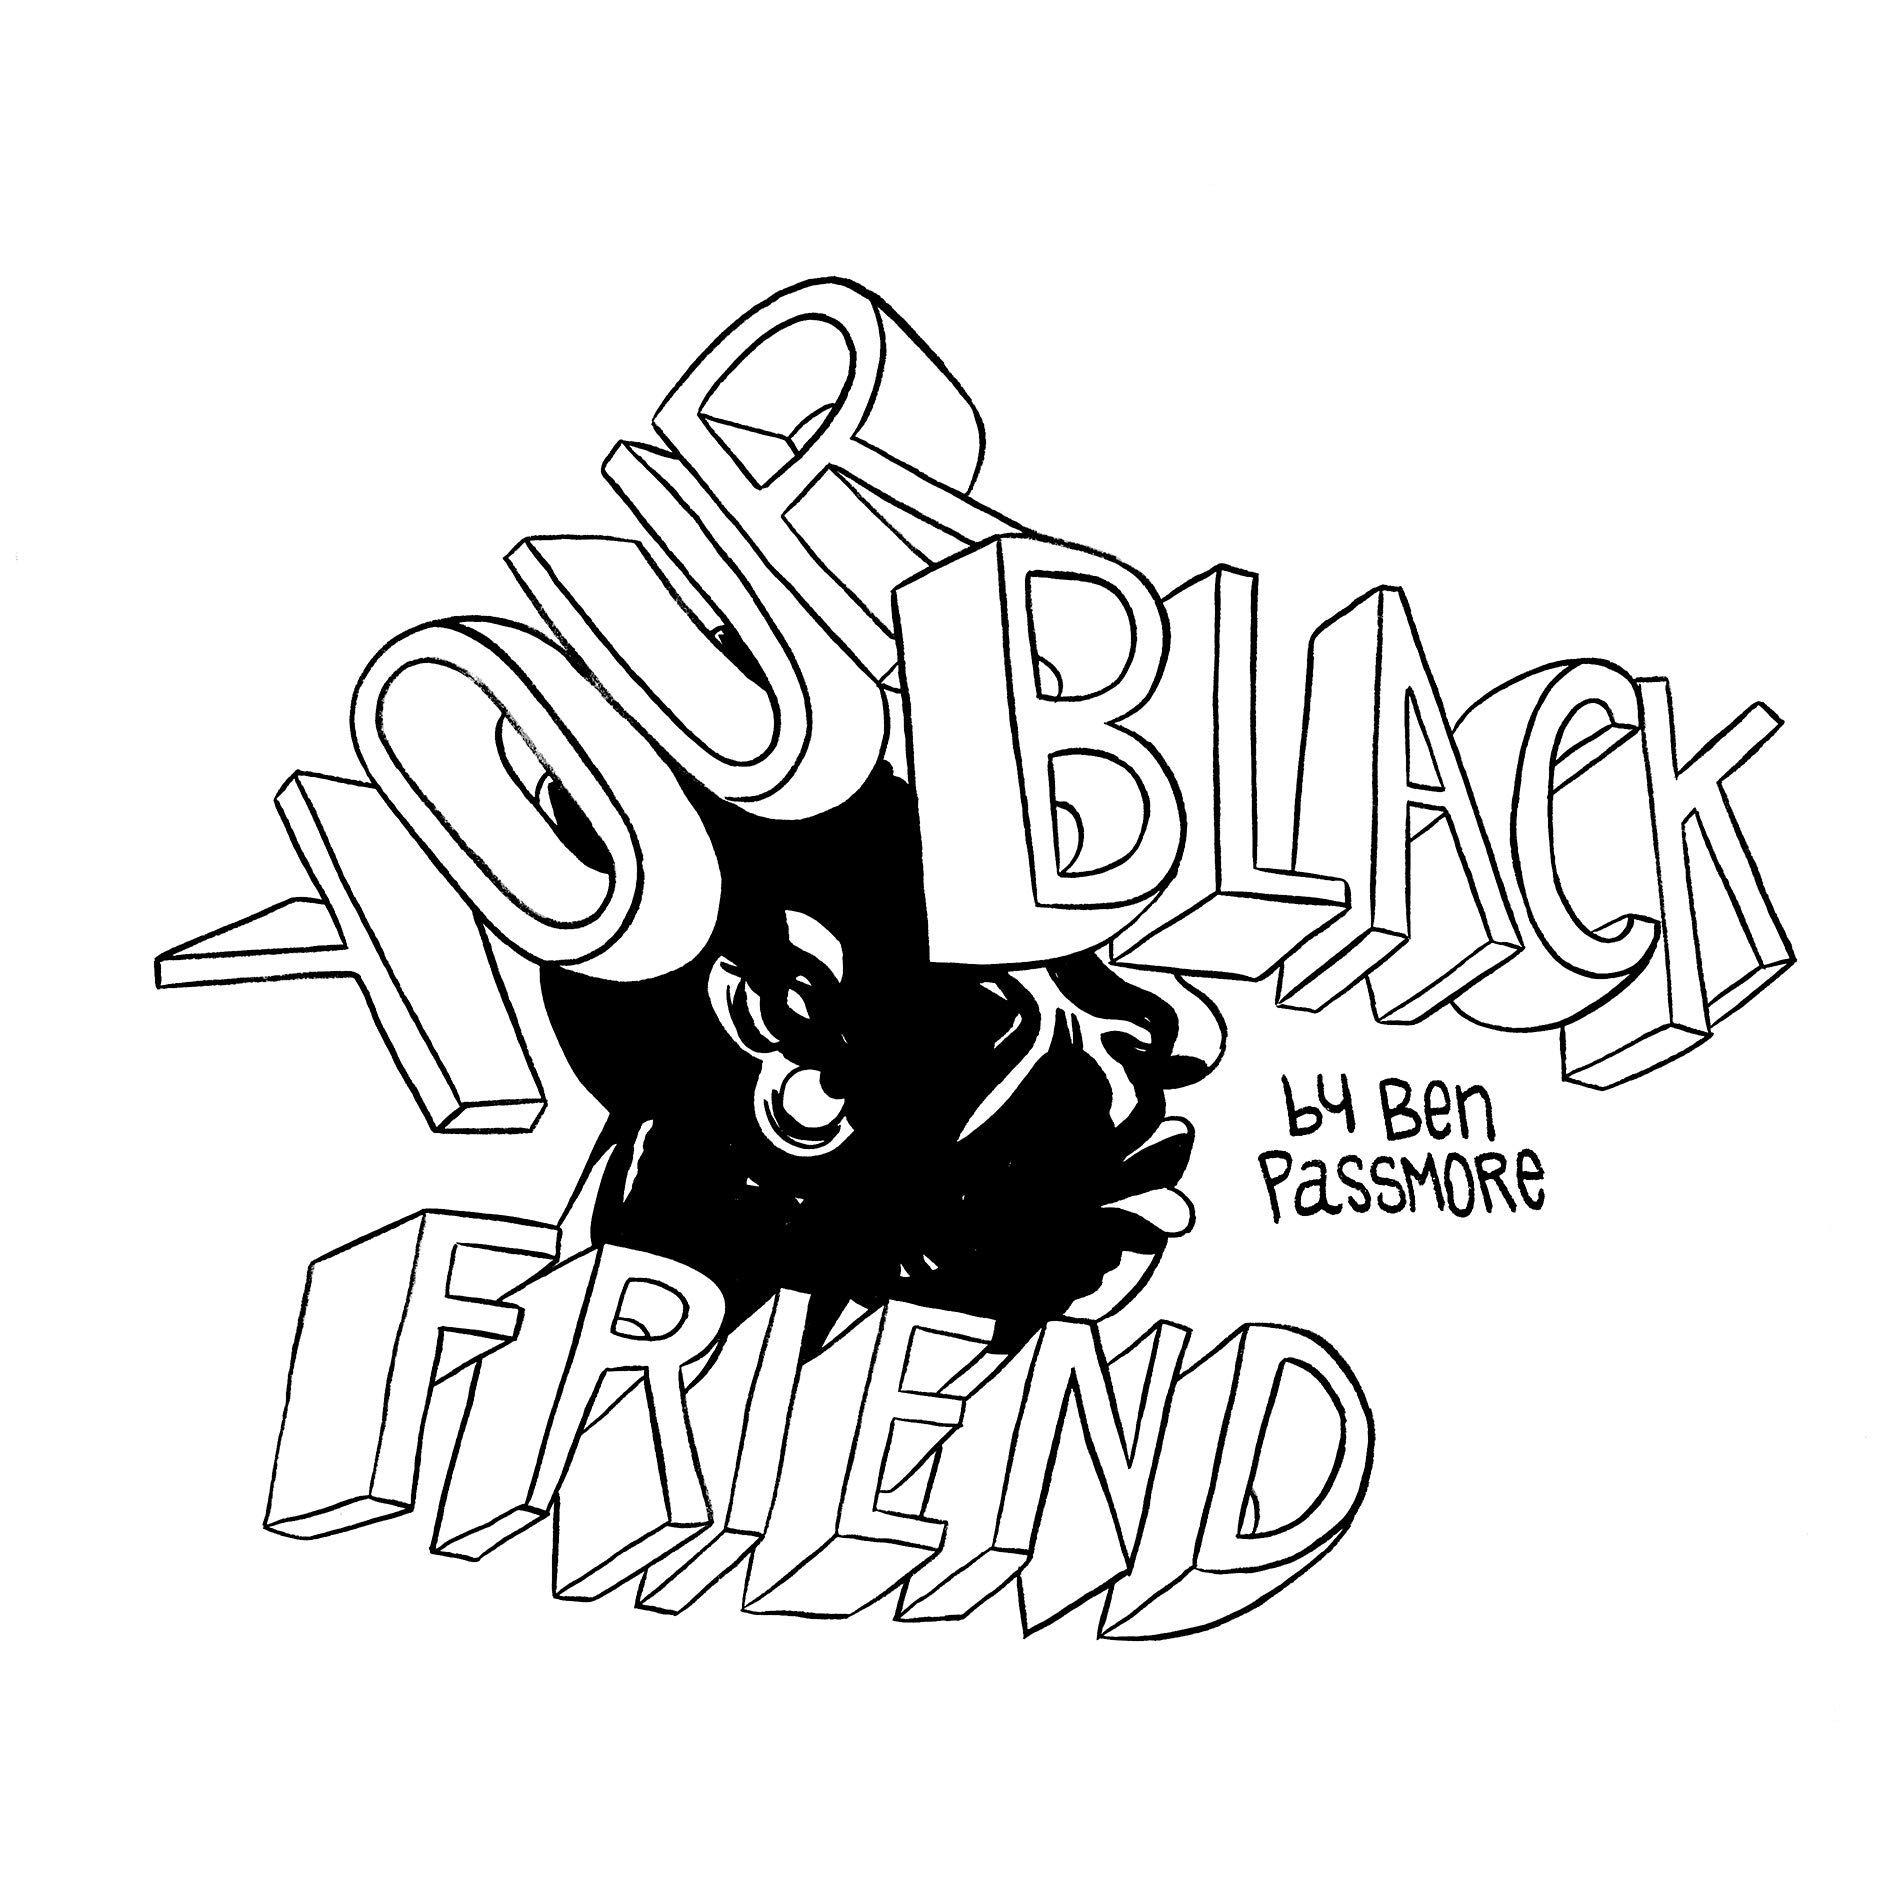 Friend Black and White Logo - Your Black Friend by Ben Passmore